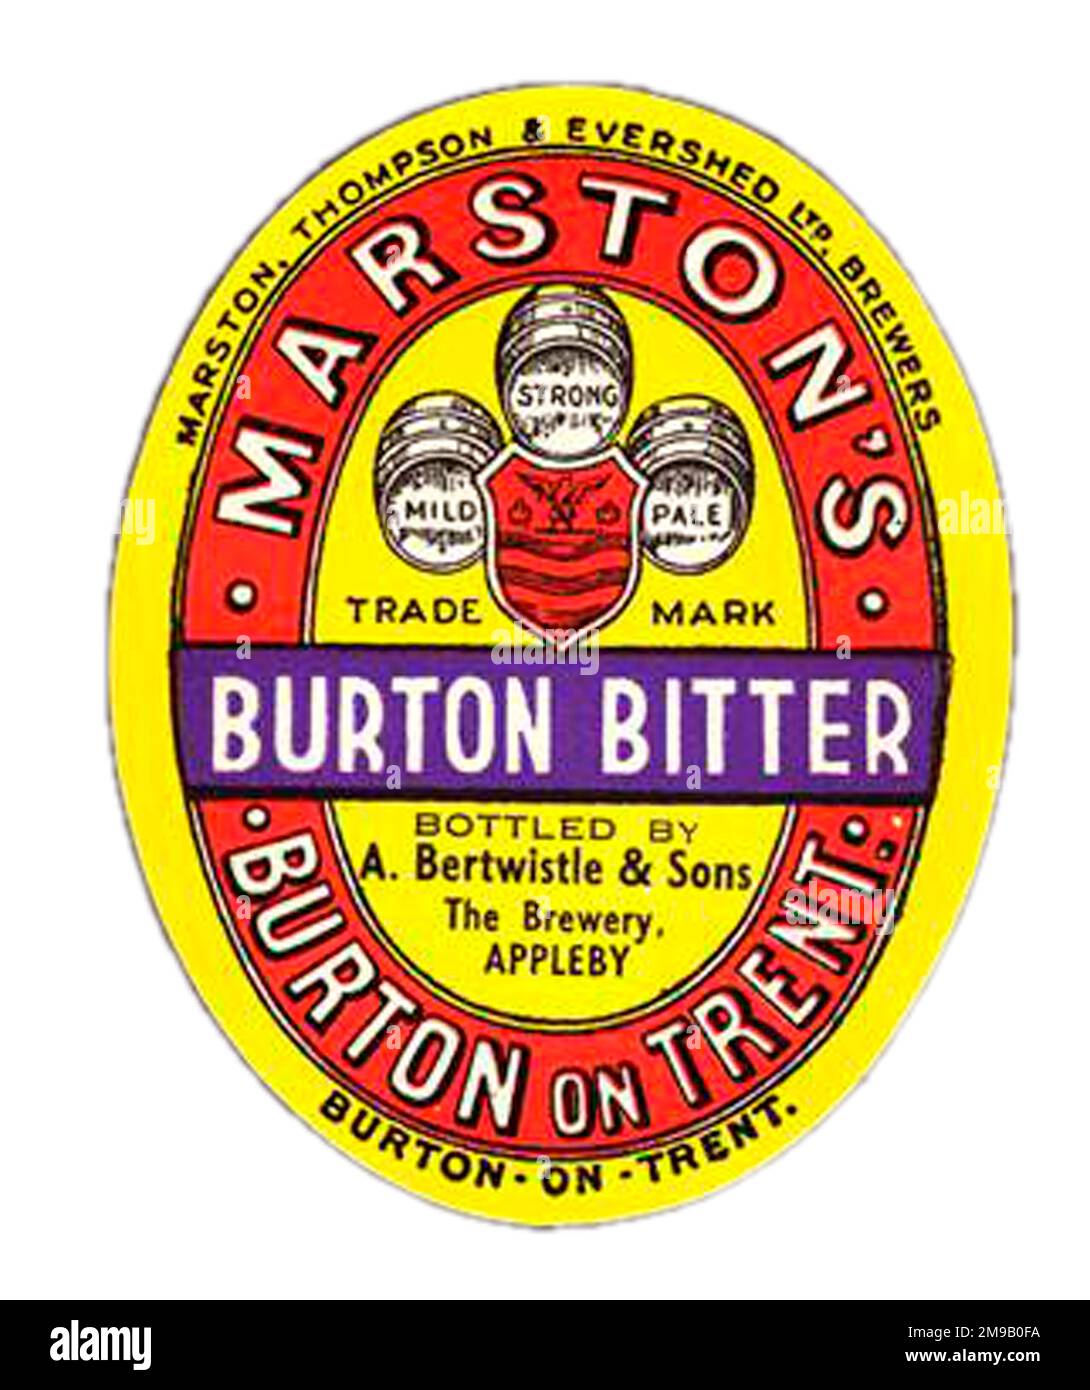 Marston's Burton Bitter Stock Photo